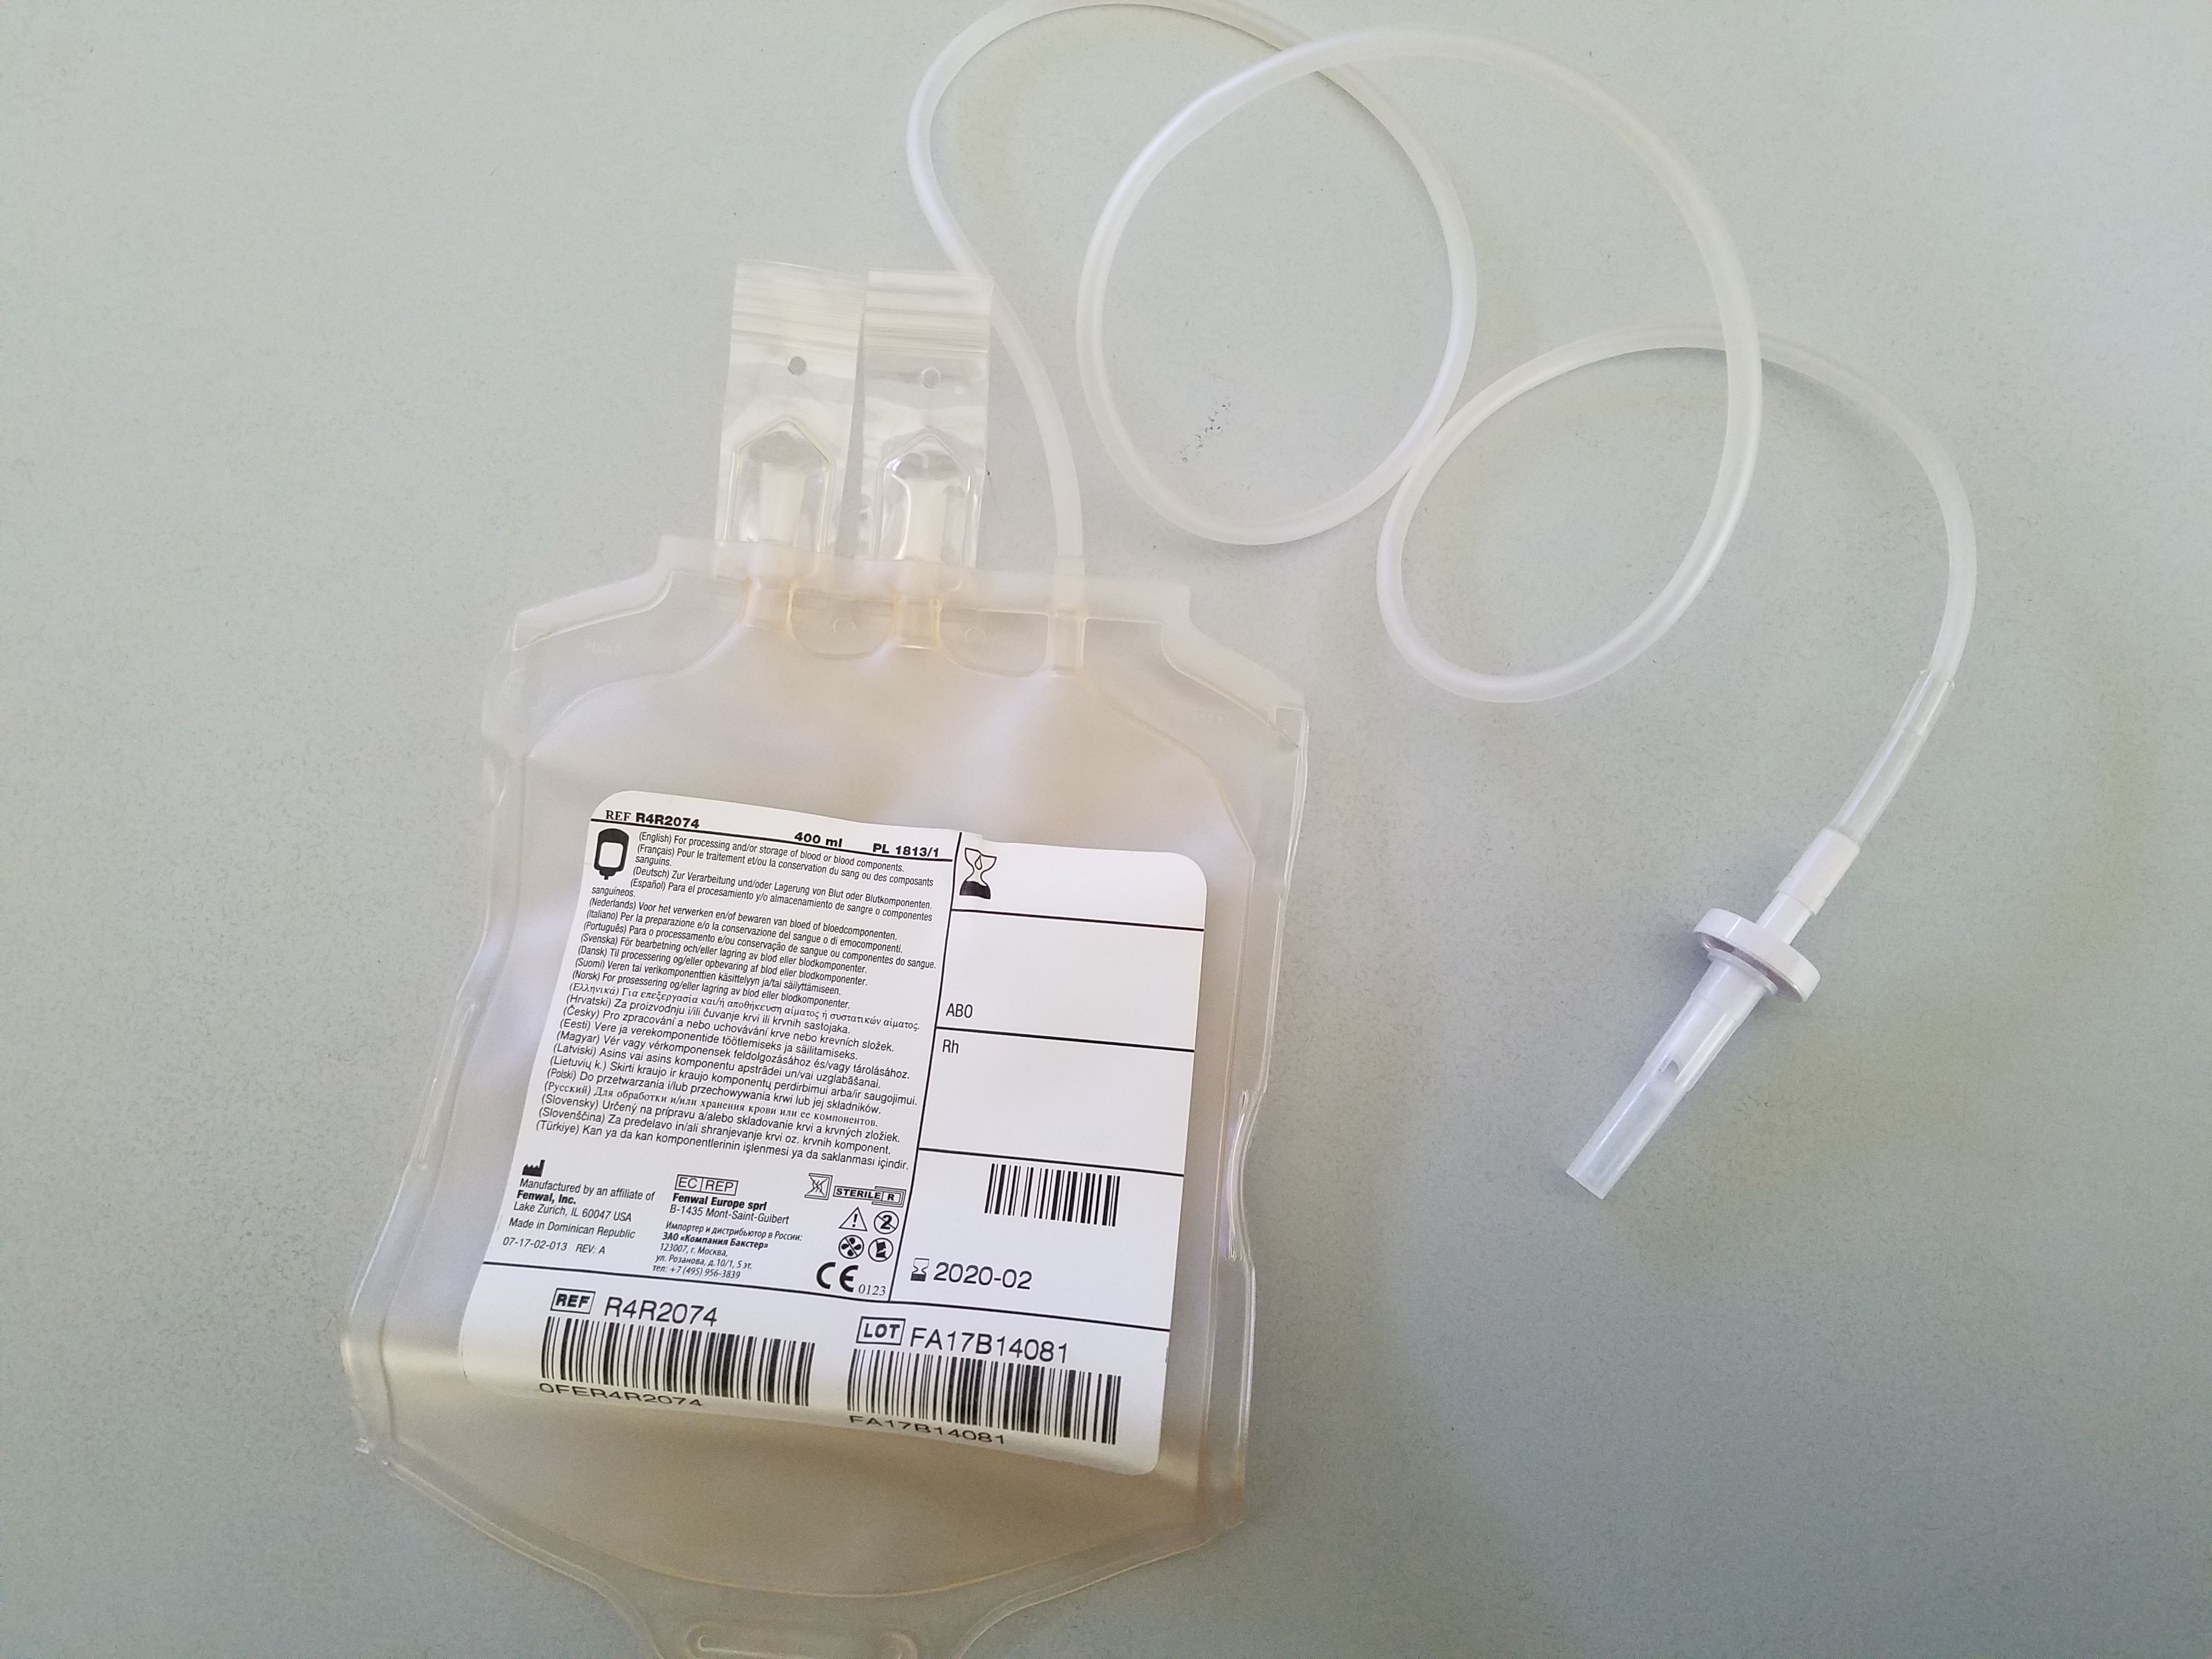 Blood transfusion bag, 400 ml